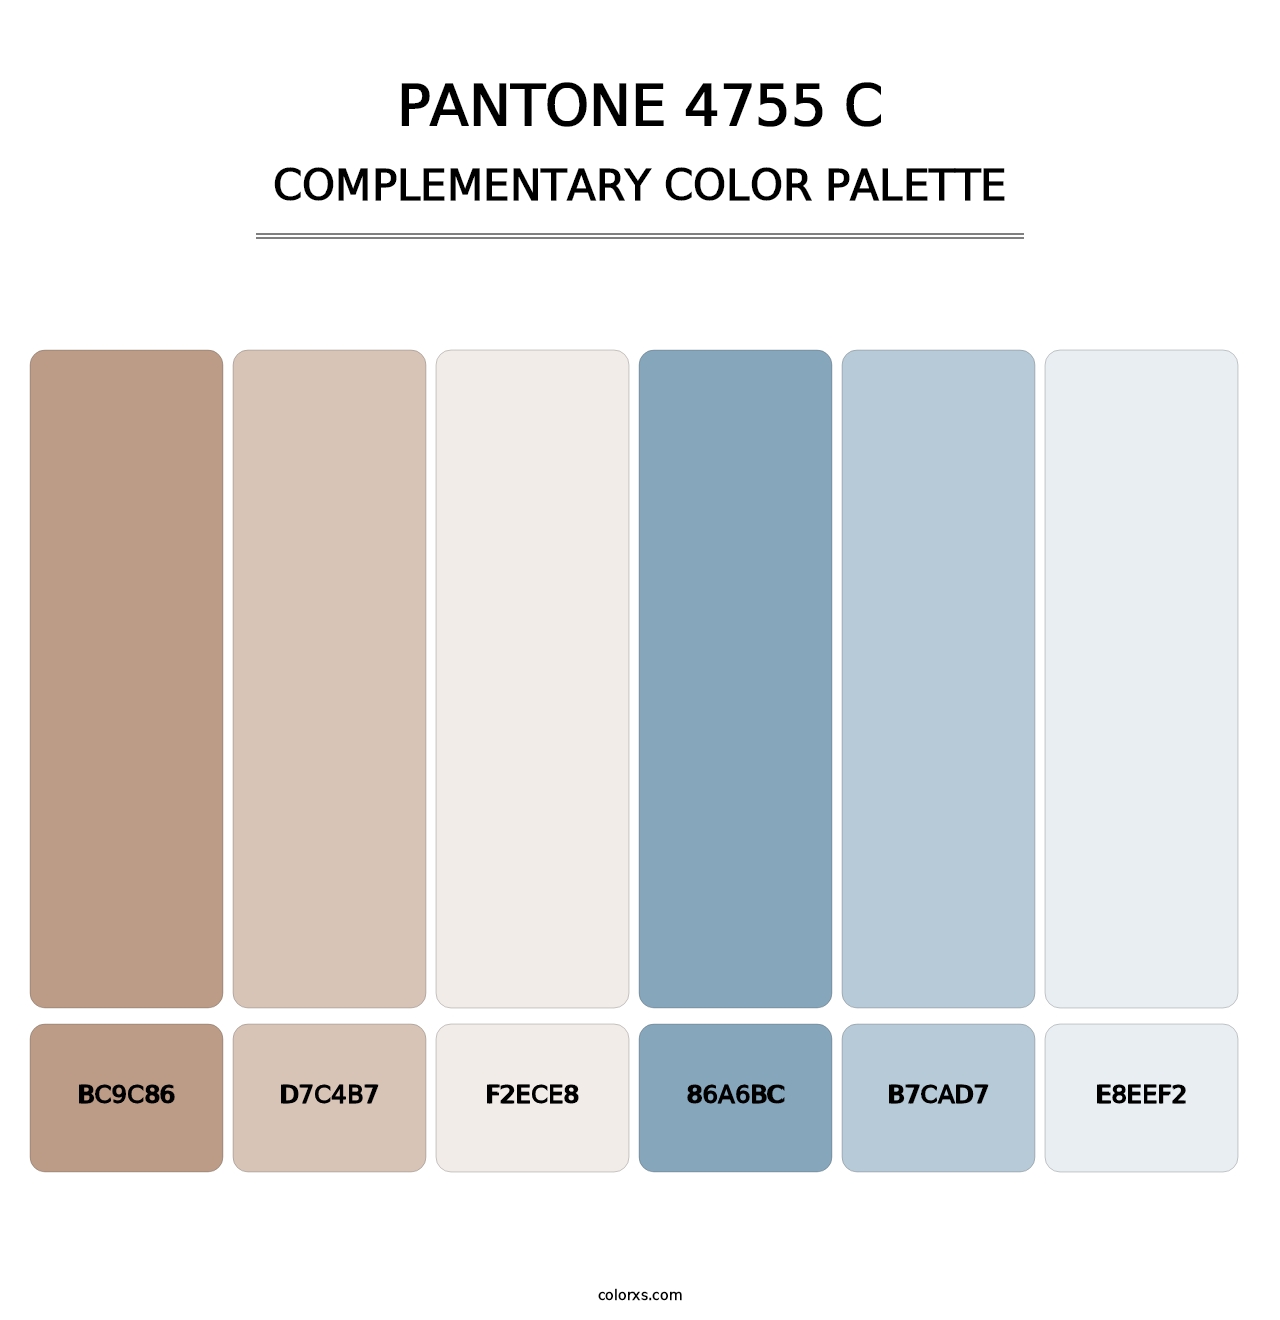 PANTONE 4755 C - Complementary Color Palette